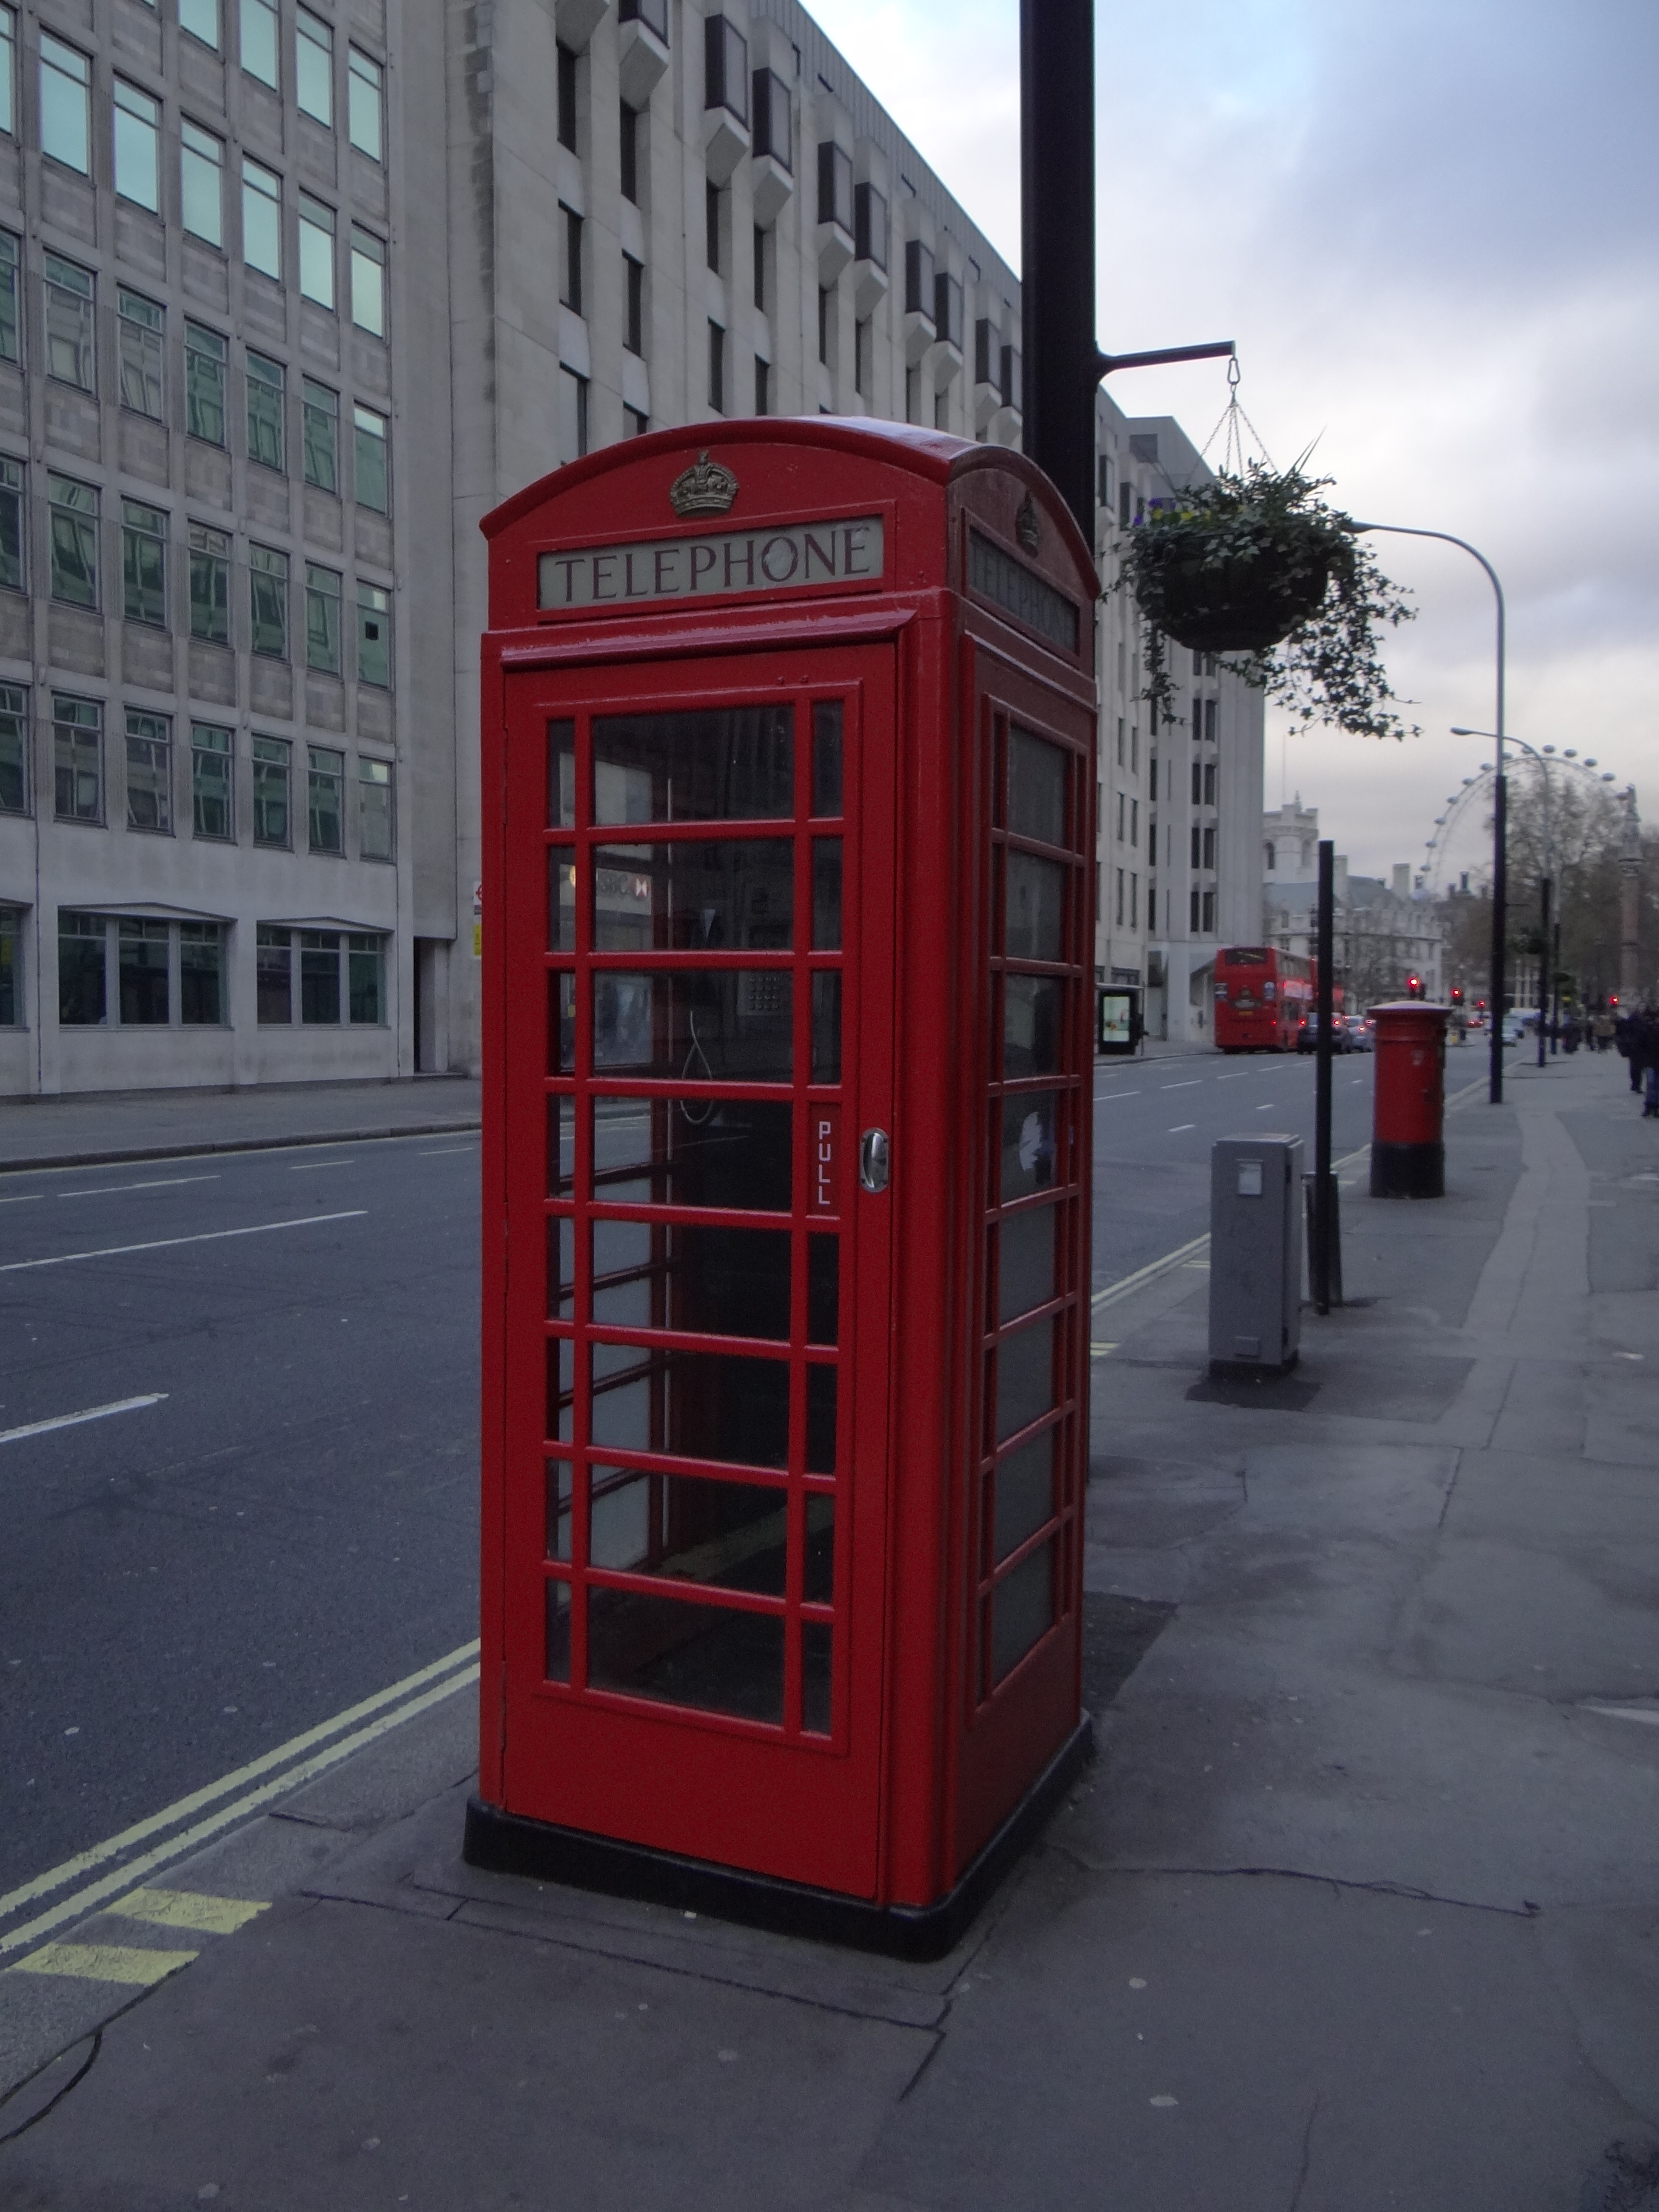 English Phone booth